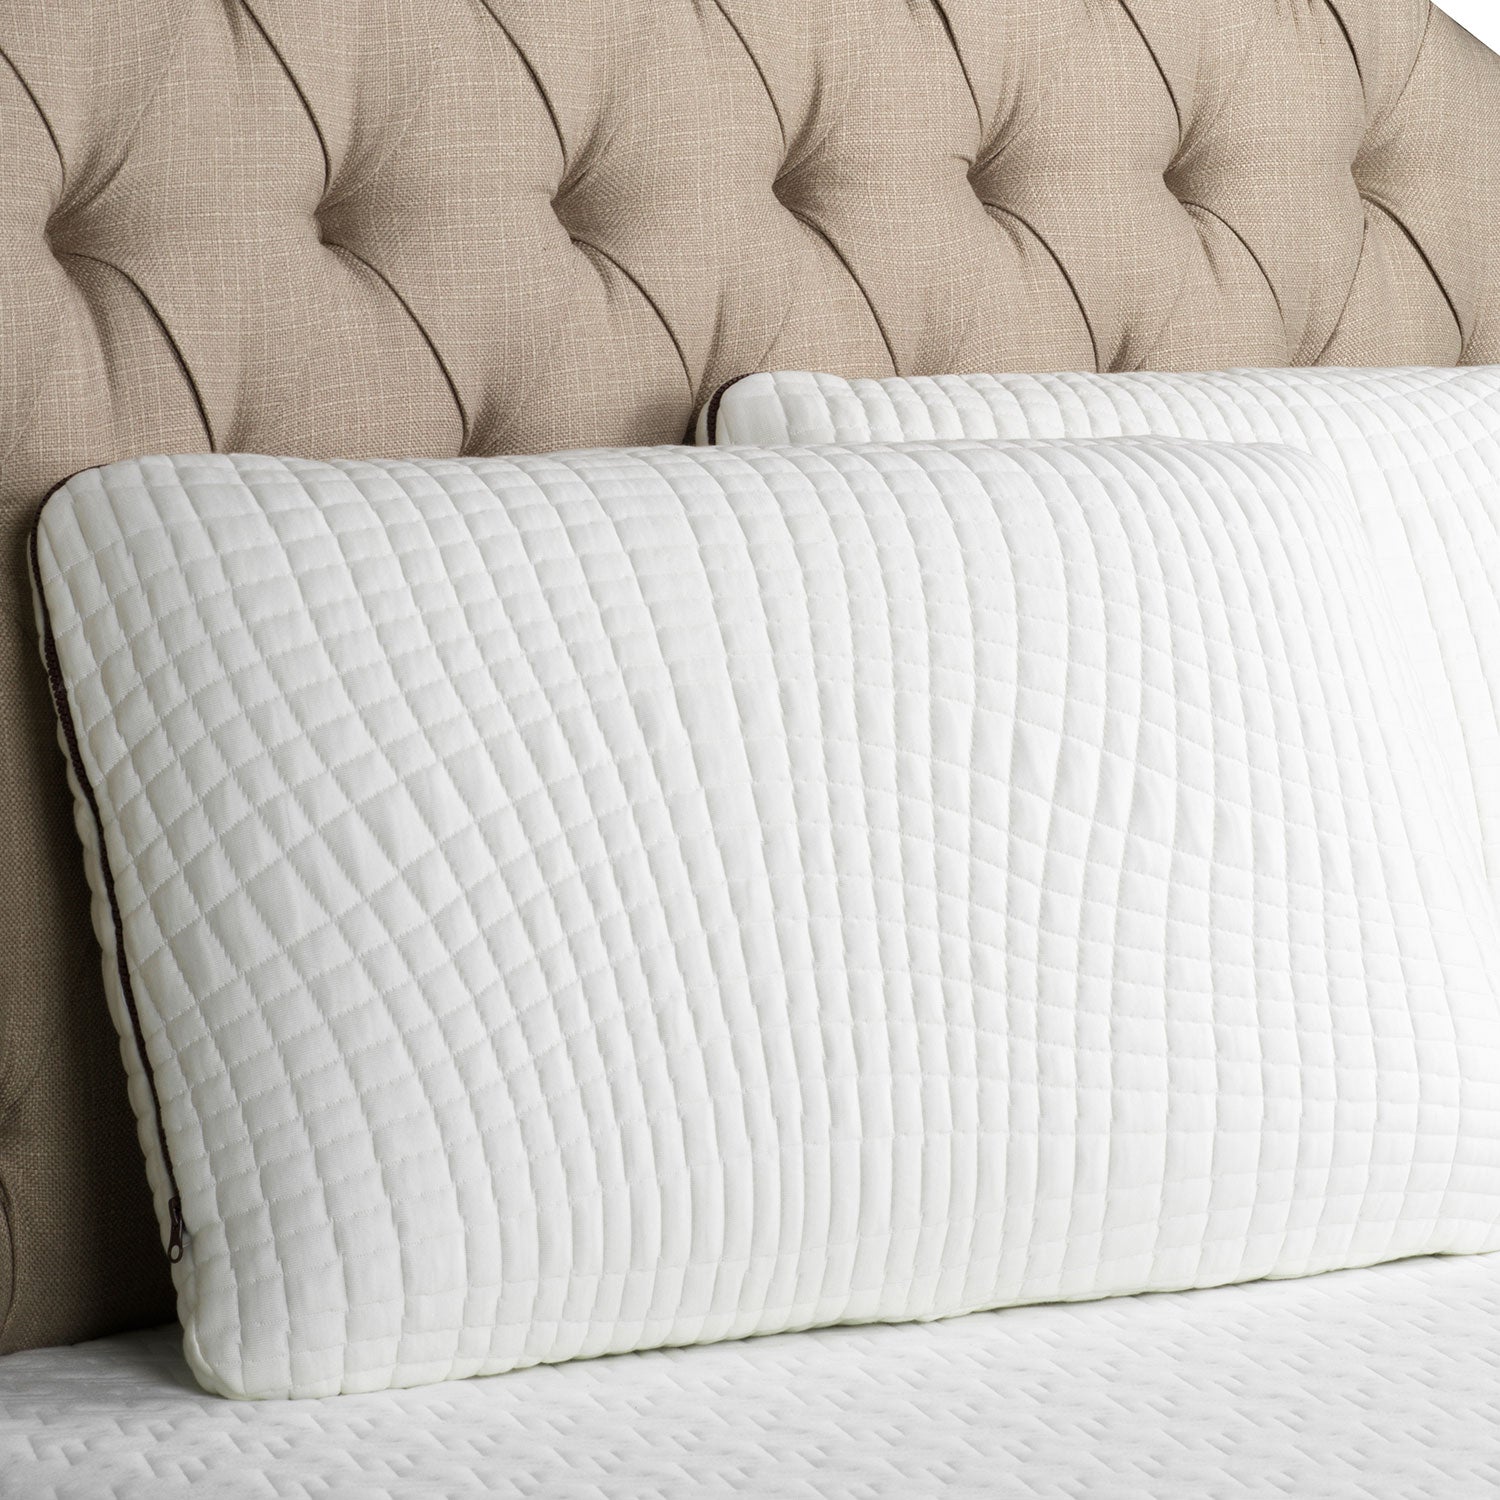 Ventilated Copper Memory Foam Pillow - Washable Cover - BlissfulNights.com